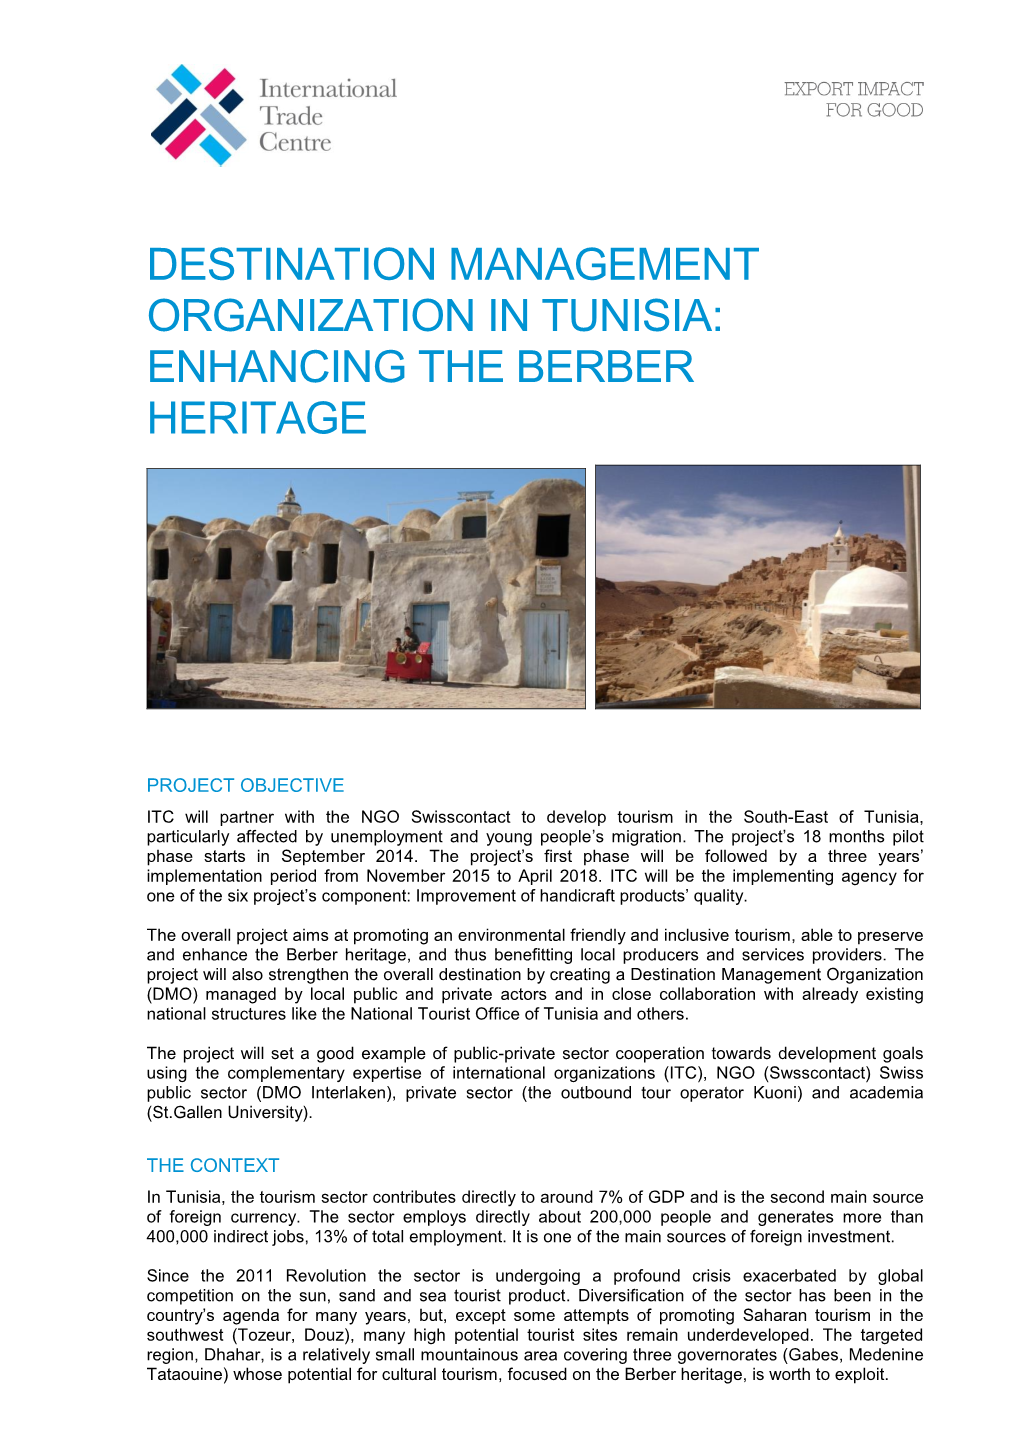 Tunisia: Enhancing the Berber Heritage